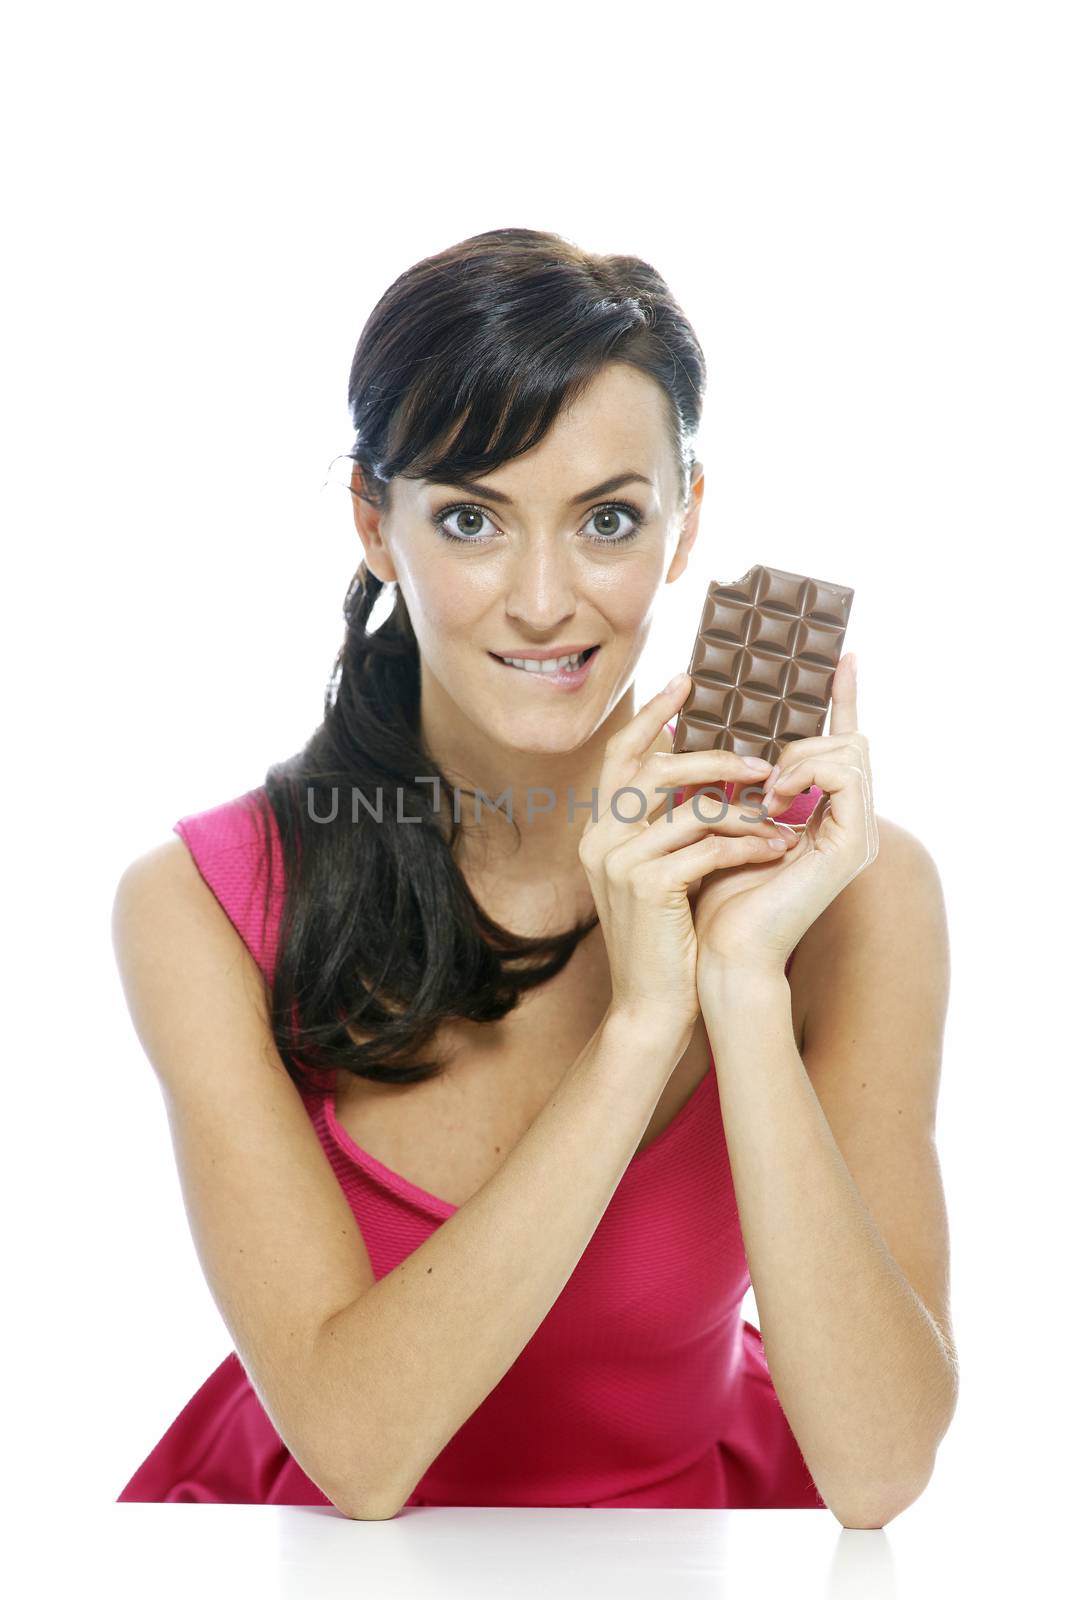 Woman eating a huge chocolate bar